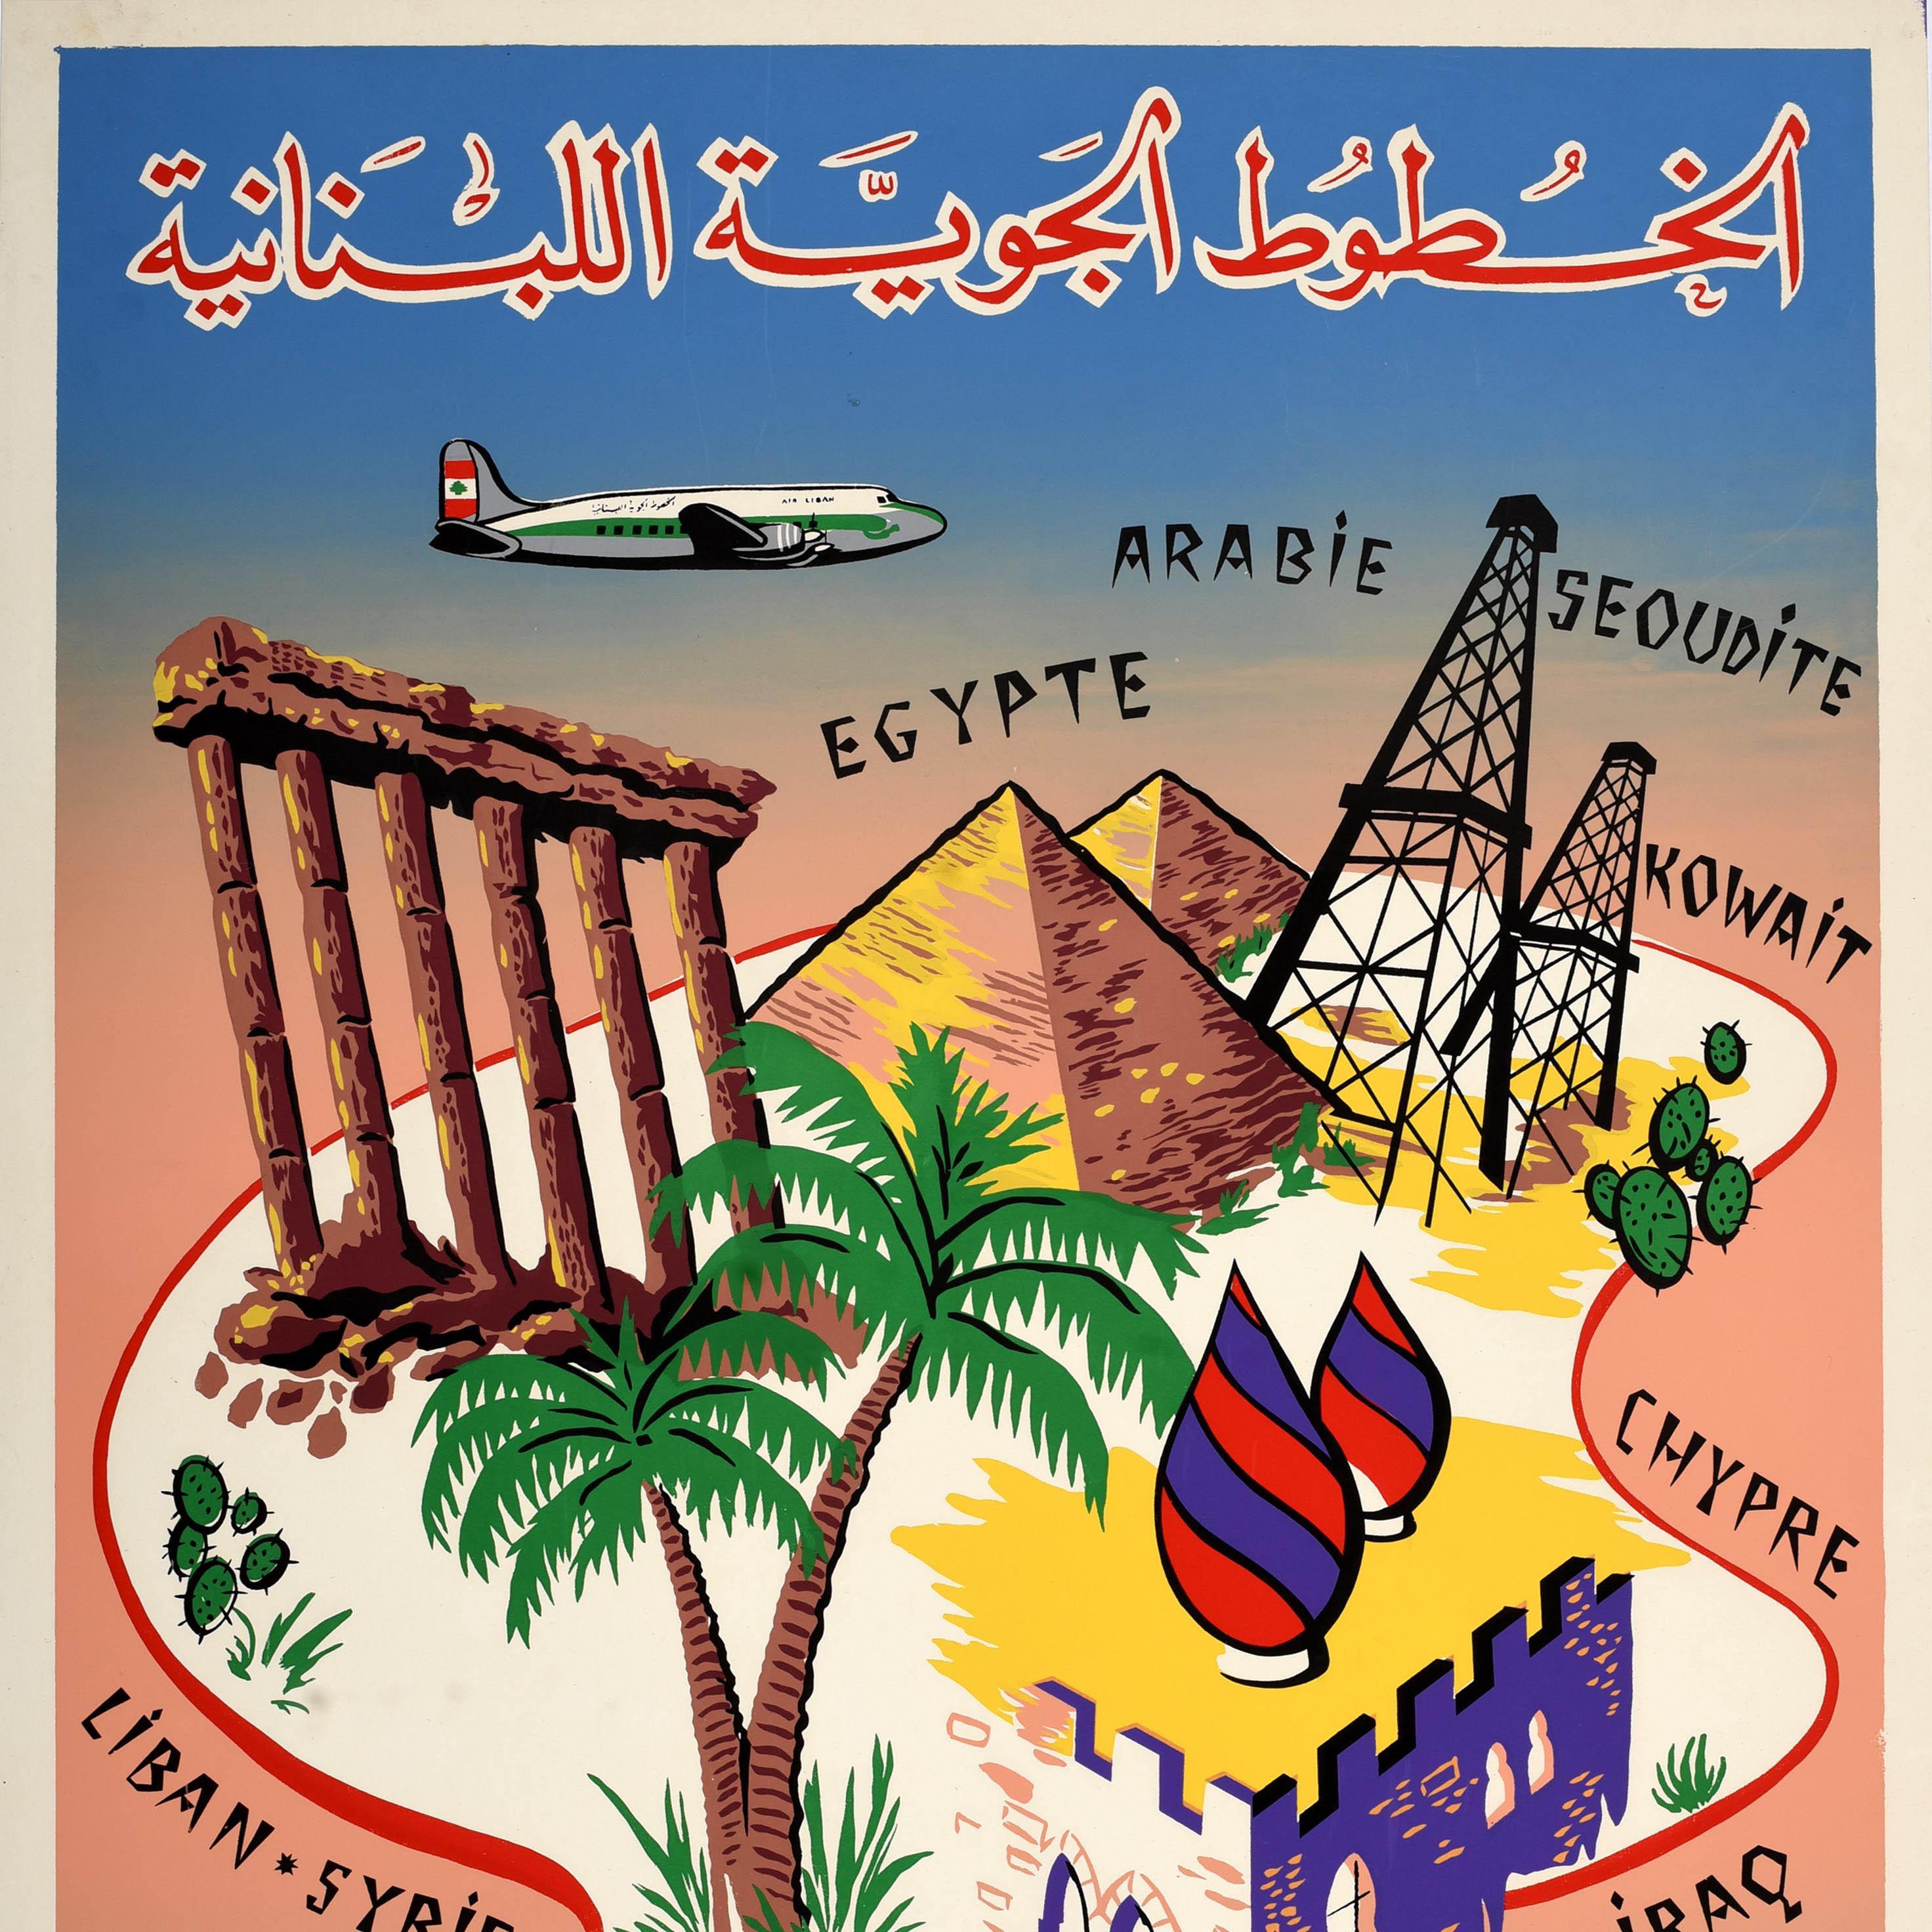 Rare original vintage travel poster for Air Liban advertising flights around the middle east - Egypt / Egypte, Saudi Arabia / Arabie Seoudite, Kuwait / Kowait, Cyprus / Chypre, Iraq, Turkey and Jordan / Turquie Jordanie, Lebanon and Syria / Liban